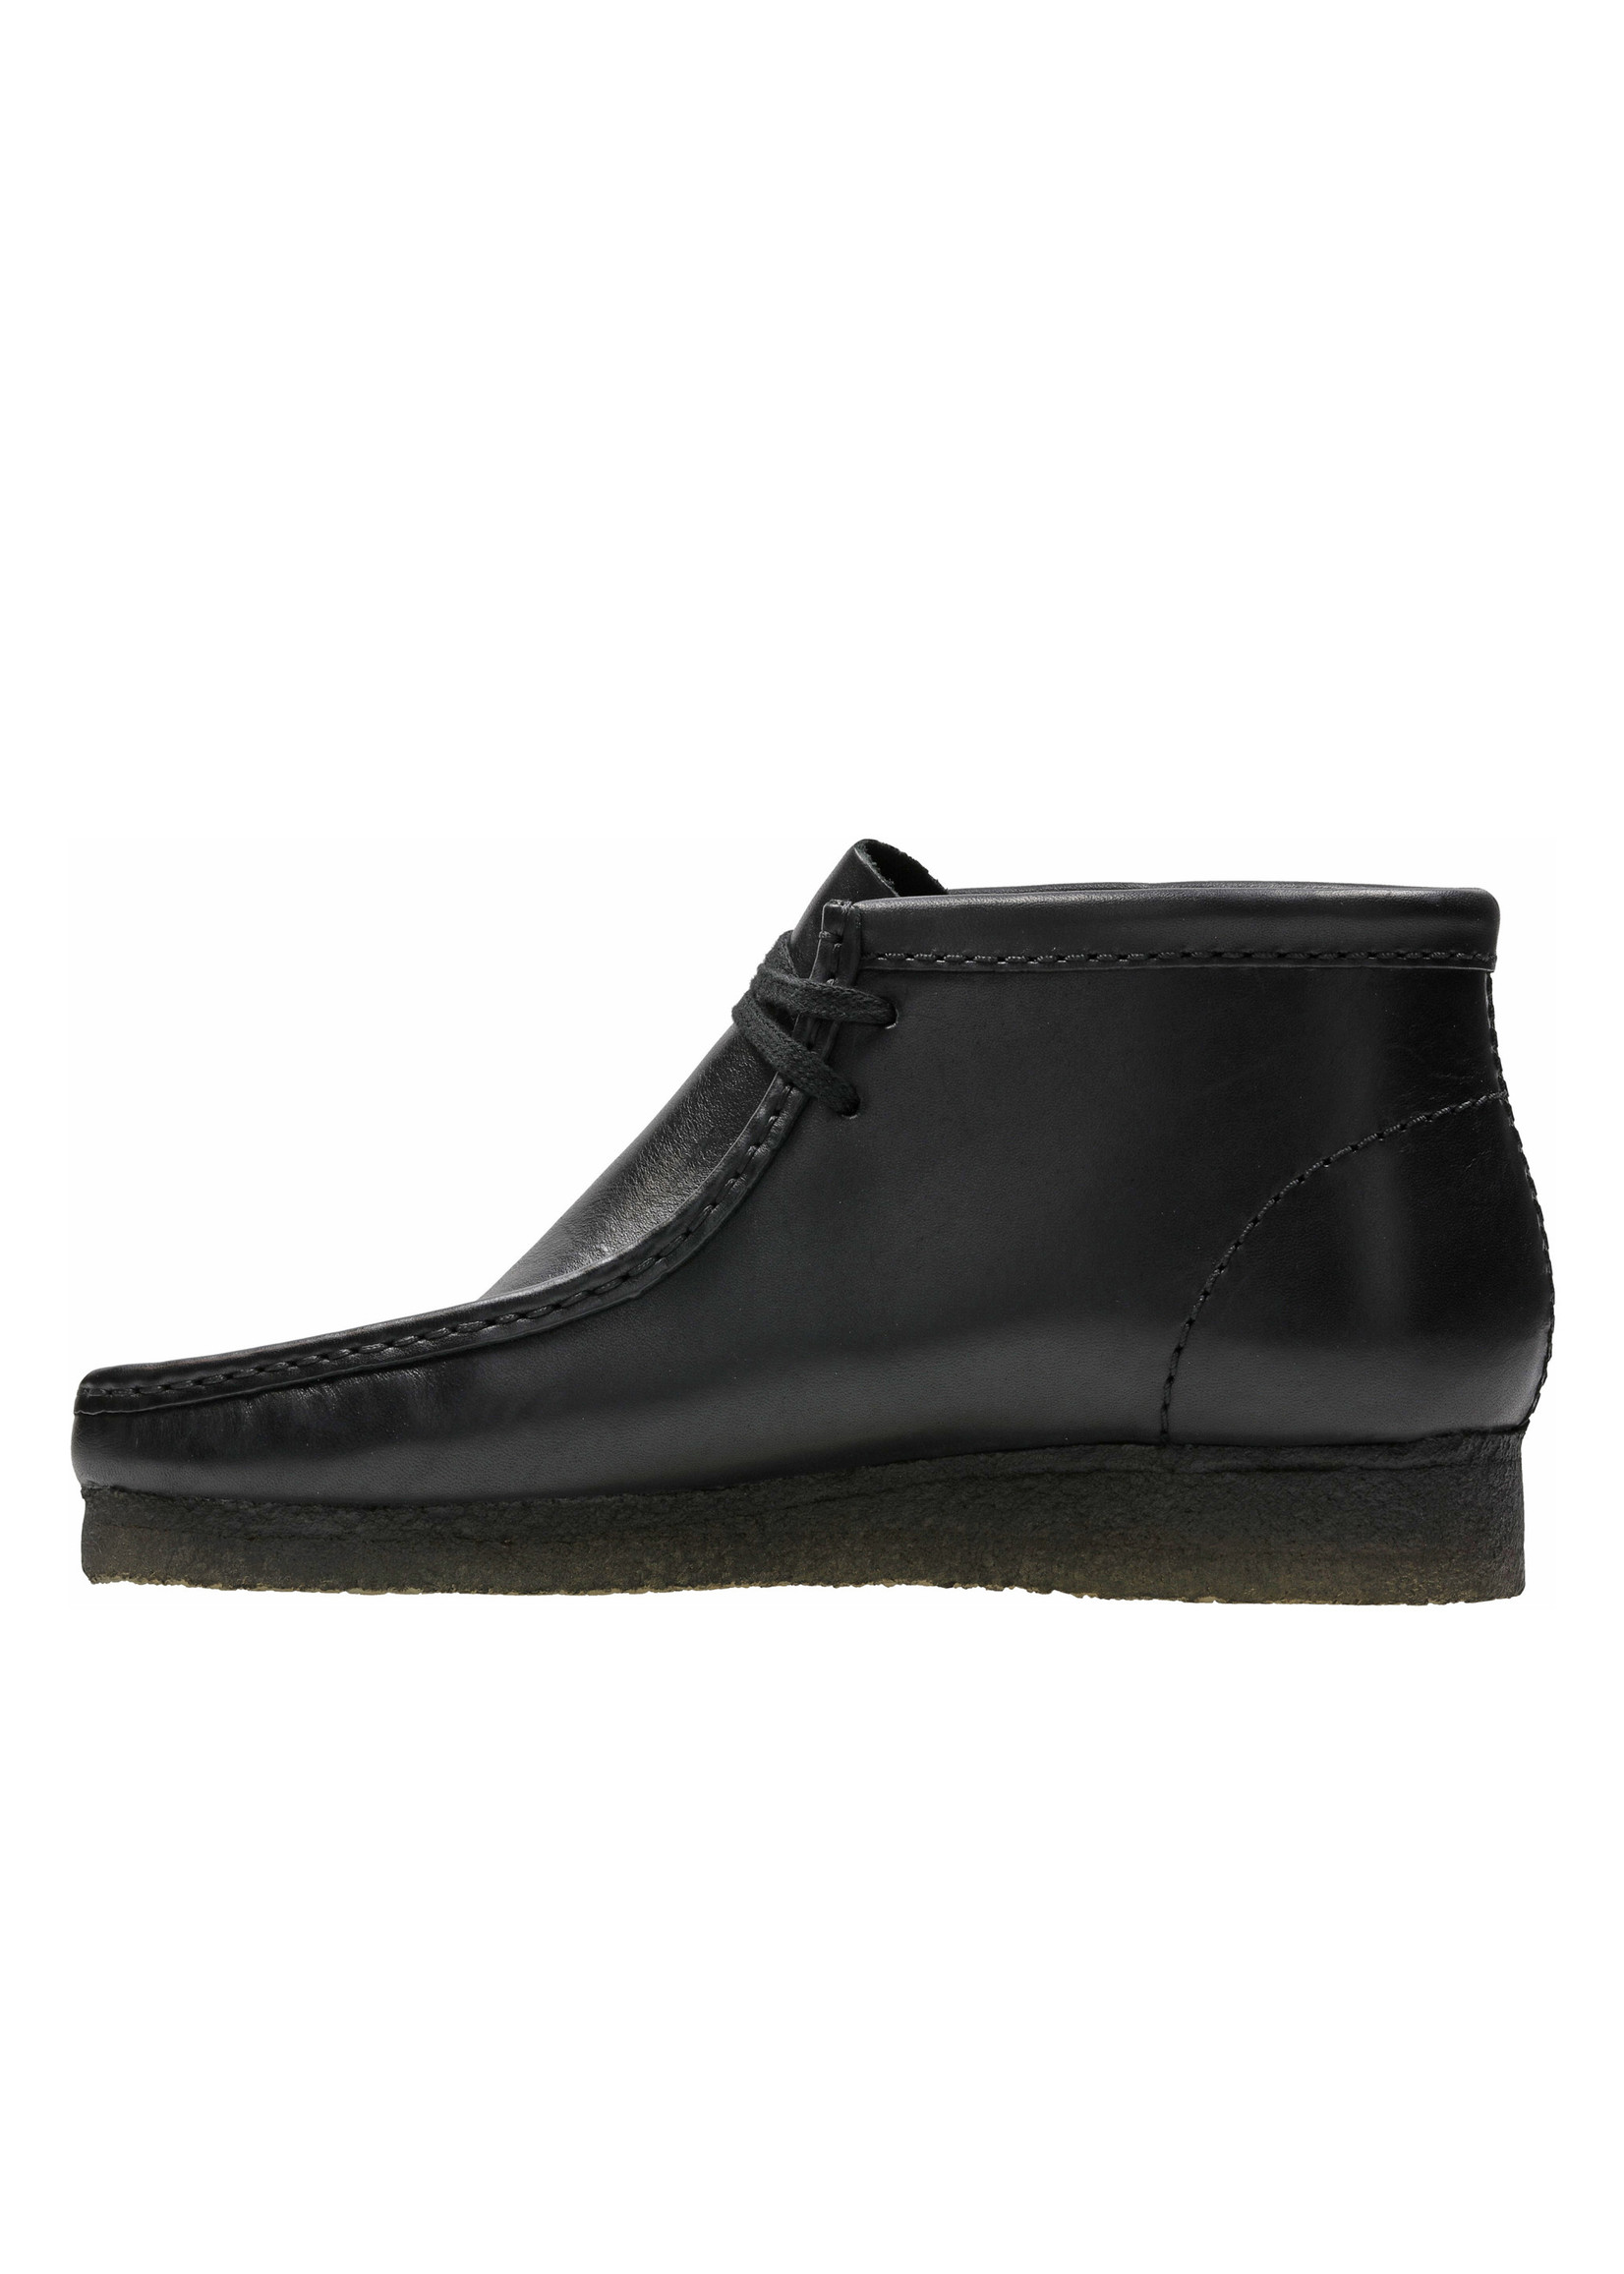 Wallabee Boot Black Leather $219.99 - SHOE PLUS